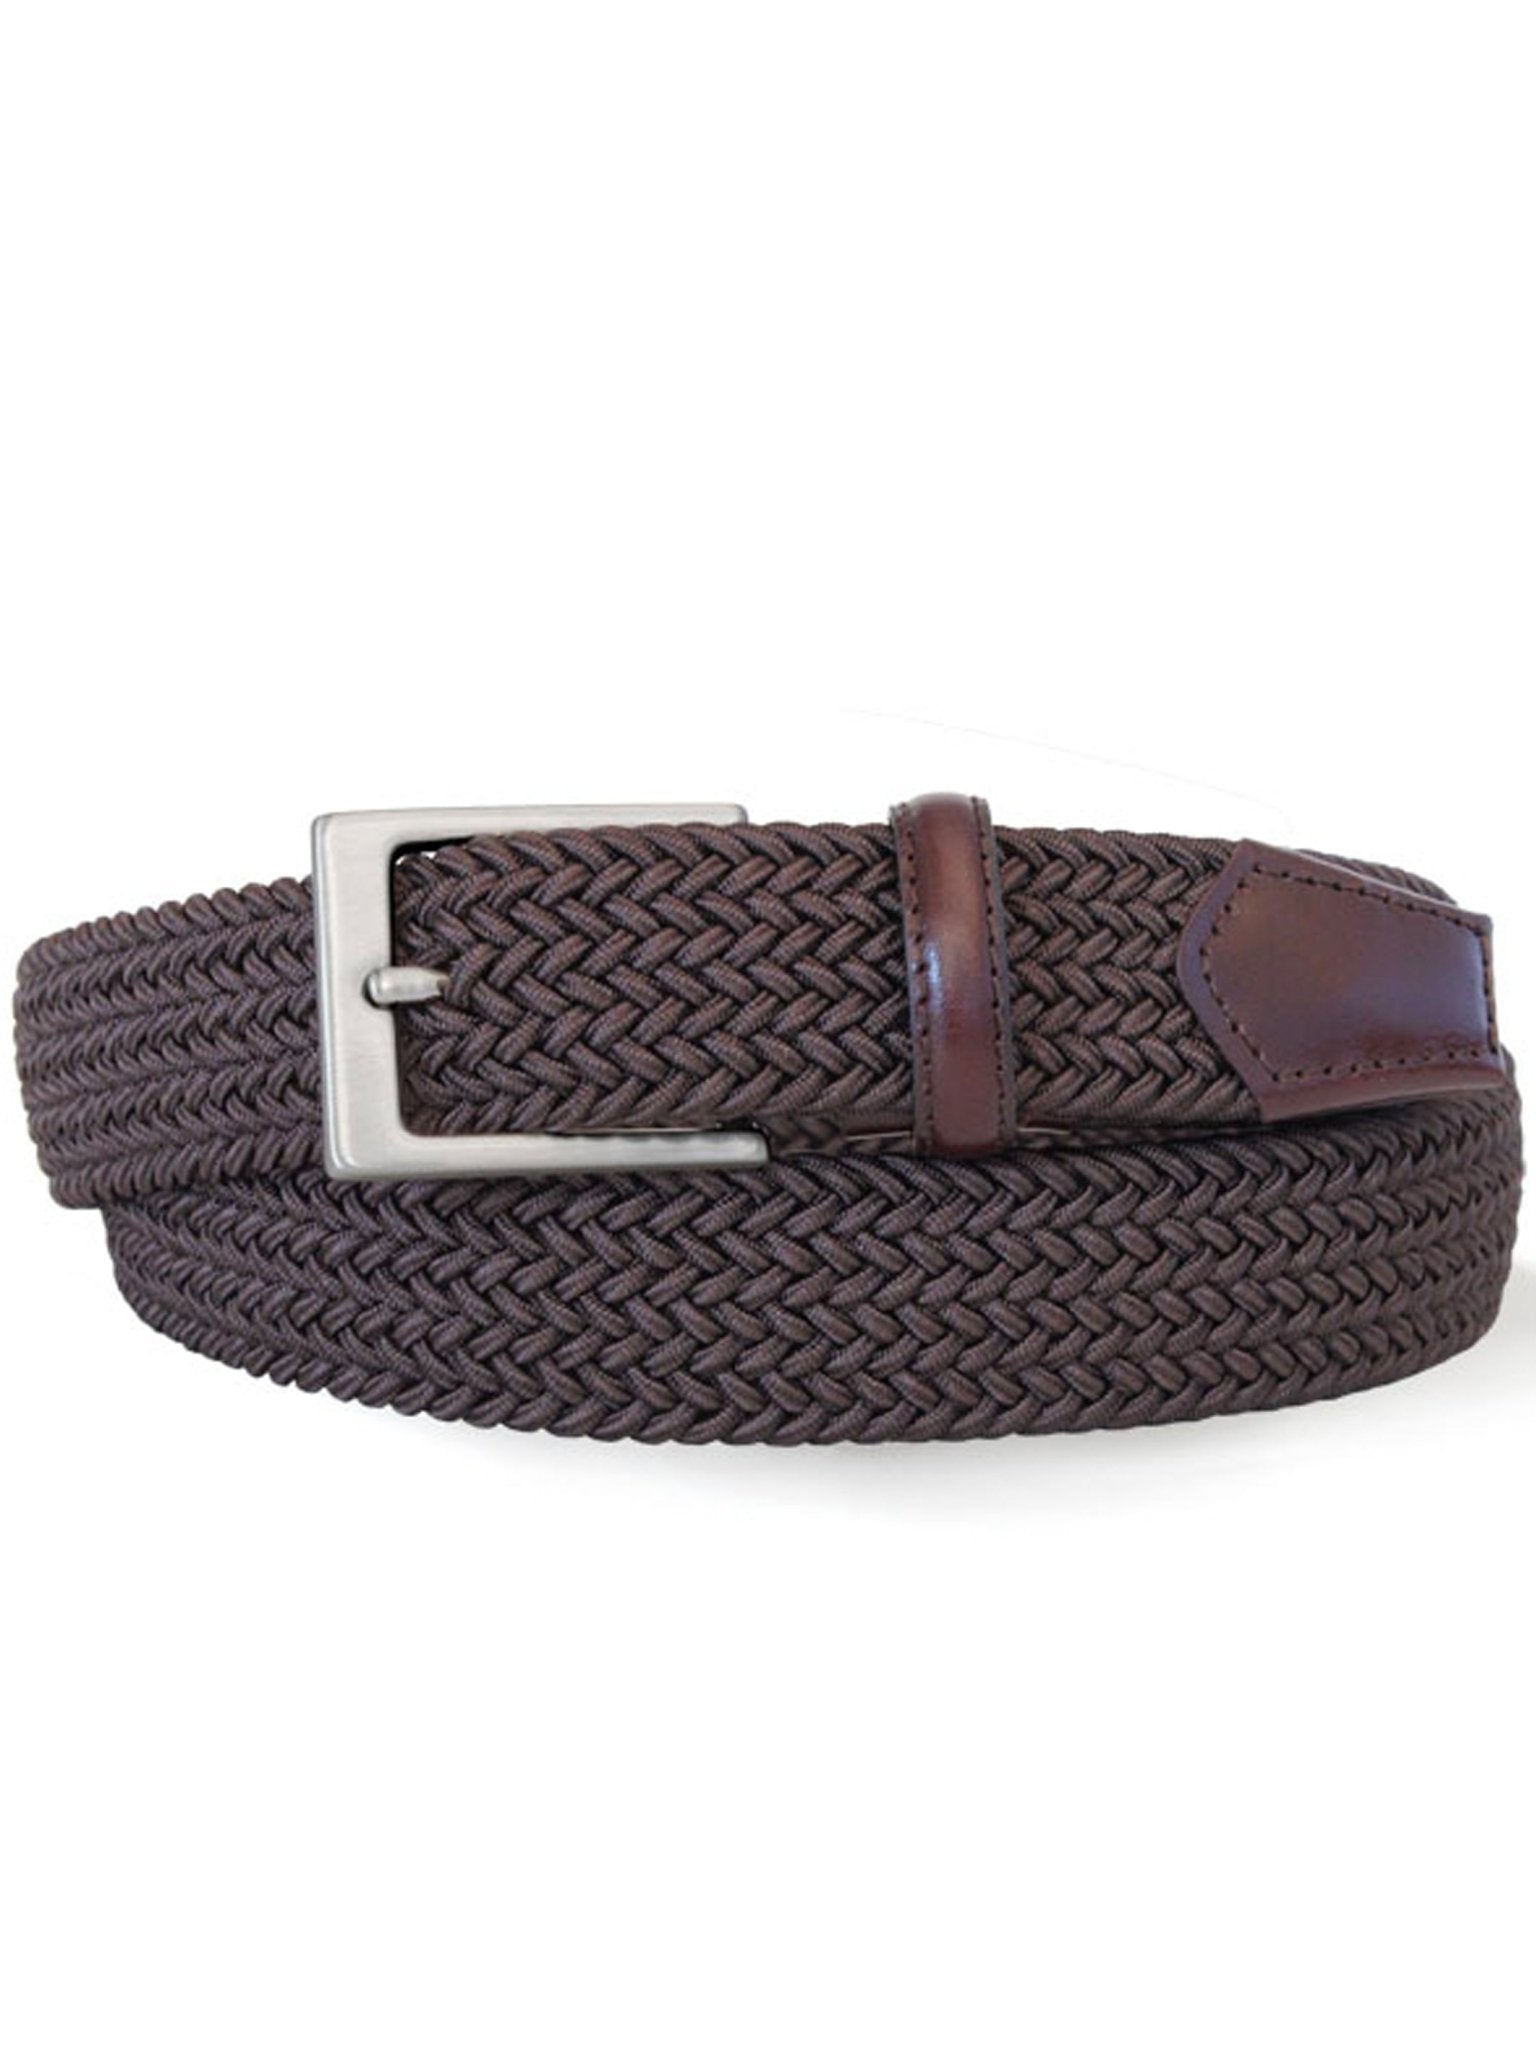 4elementsclothingRobert CharlesRobert Charles Belts - 1003 Leather & Cotton Blend Mens Belt - 32mm leather width - Made in ItalyBelts1003/brown/S